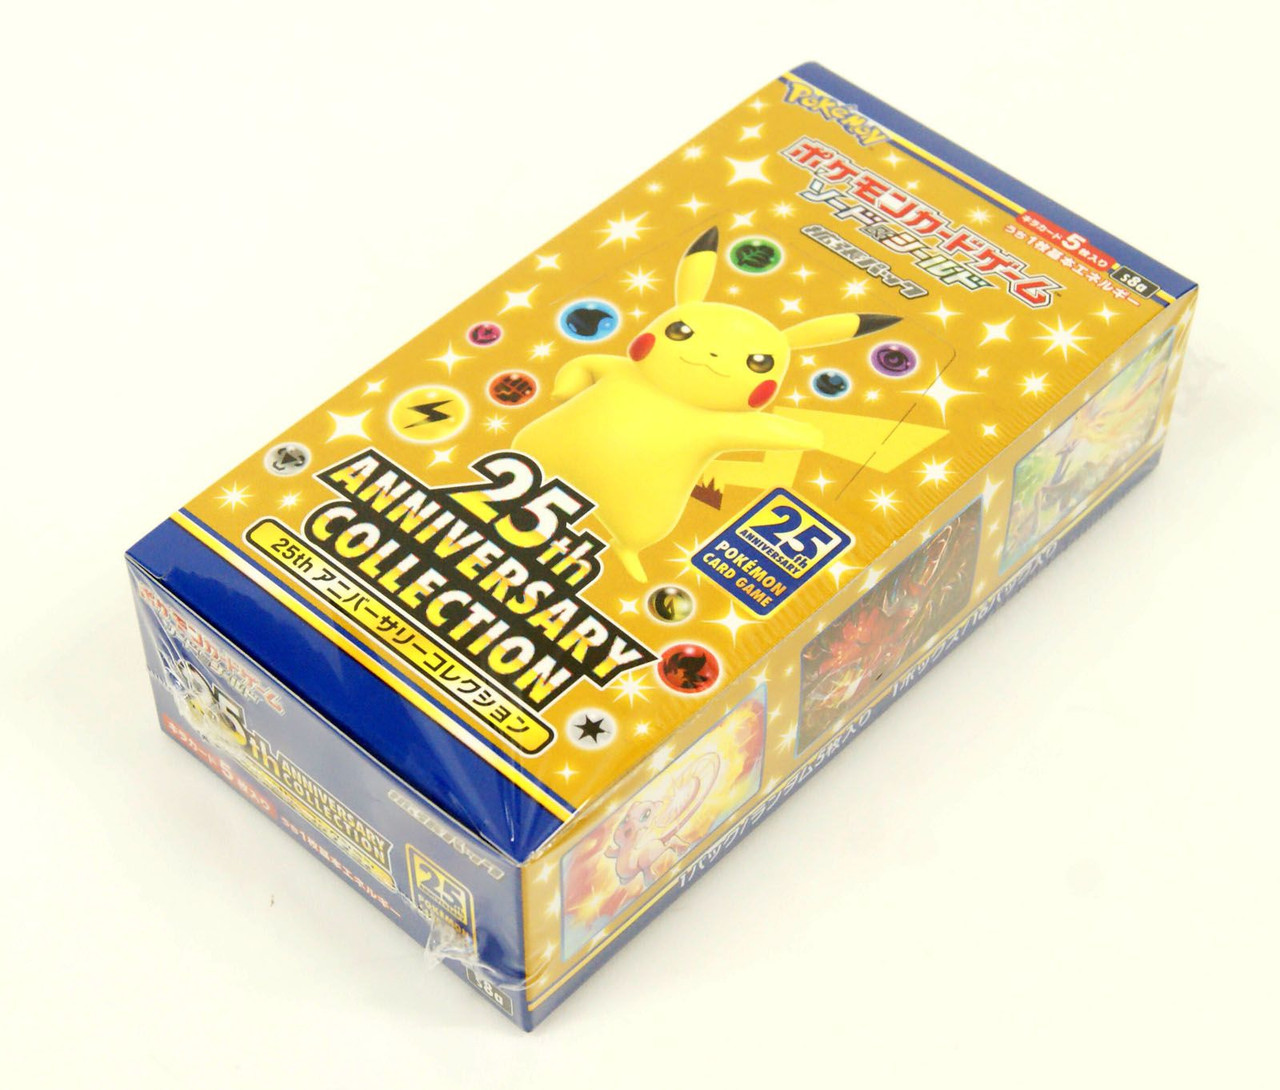 Pokemon gifts: A box of Pokemon cards